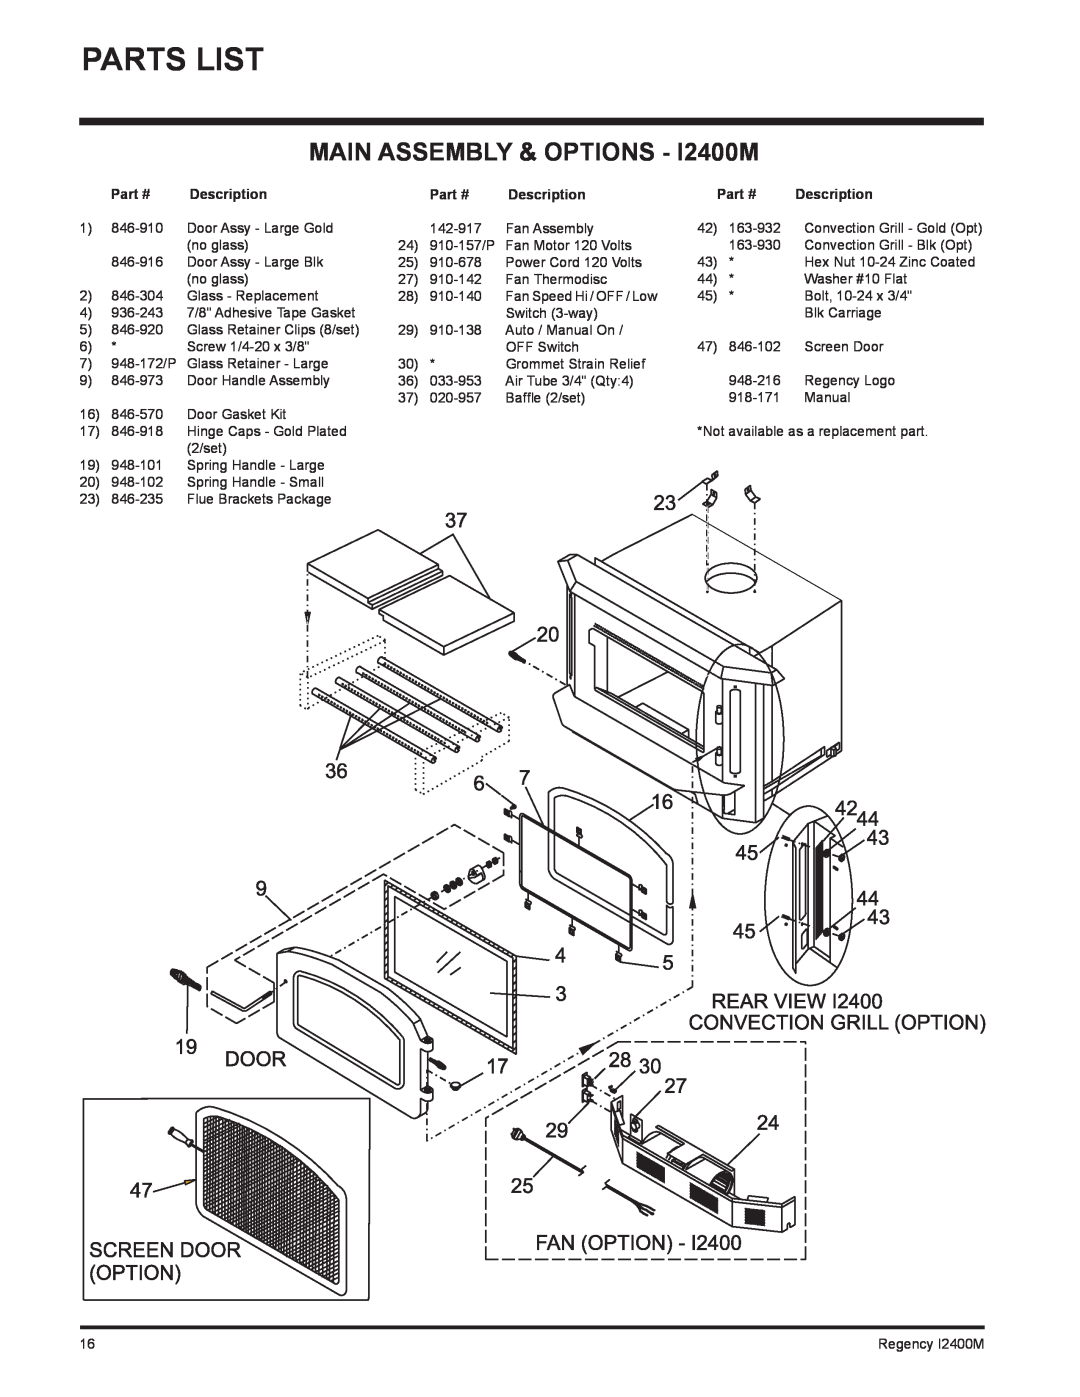 Regency installation manual Parts List, MAIN ASSEMBLY & OPTIONS - I2400M 